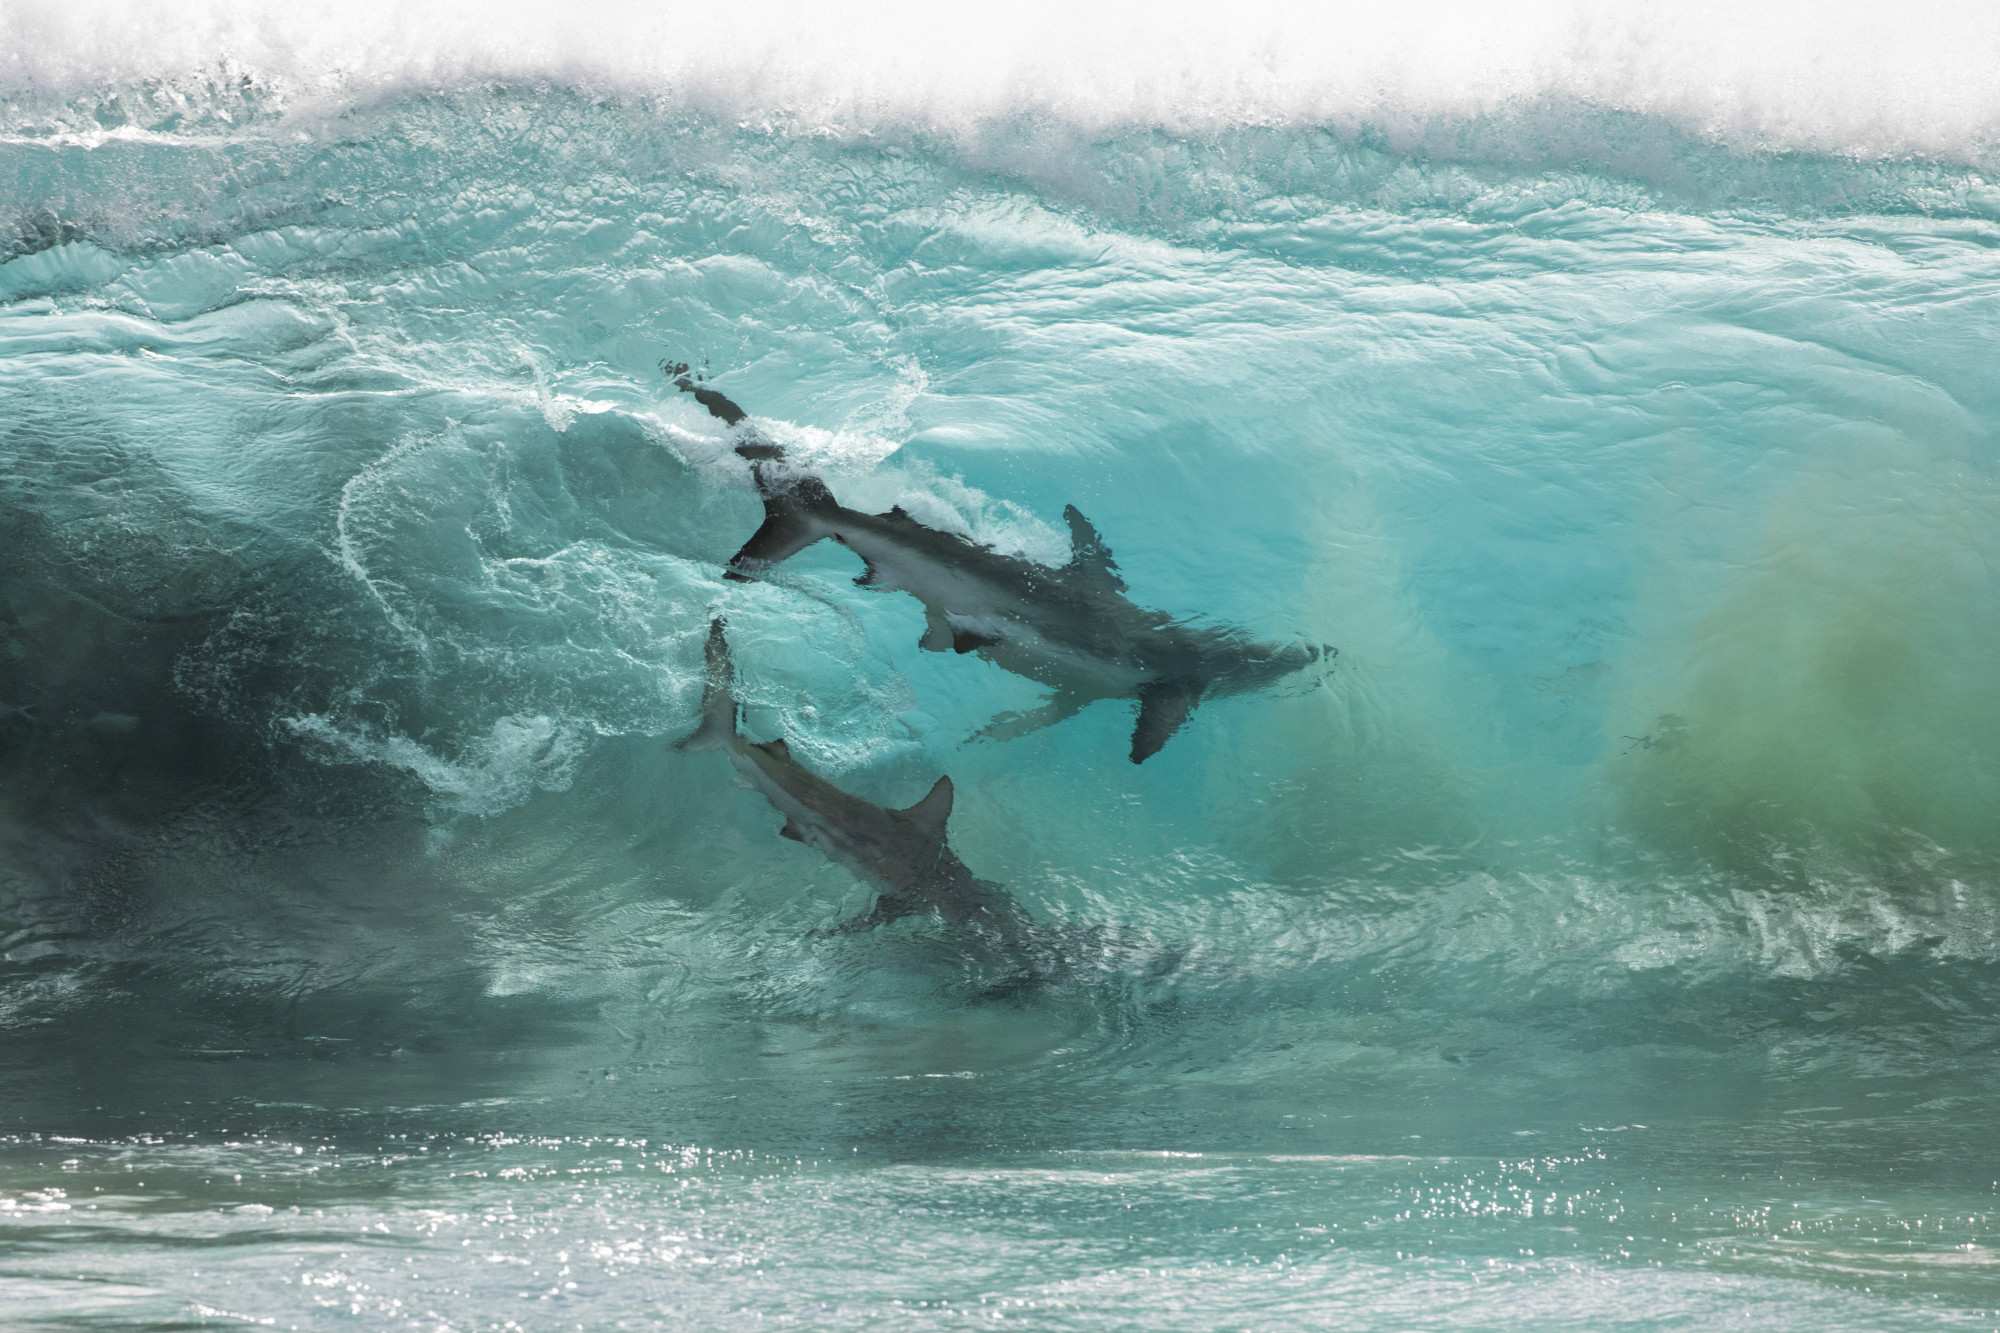 General 2000x1333 nature animals sea shark waves water underwater photography